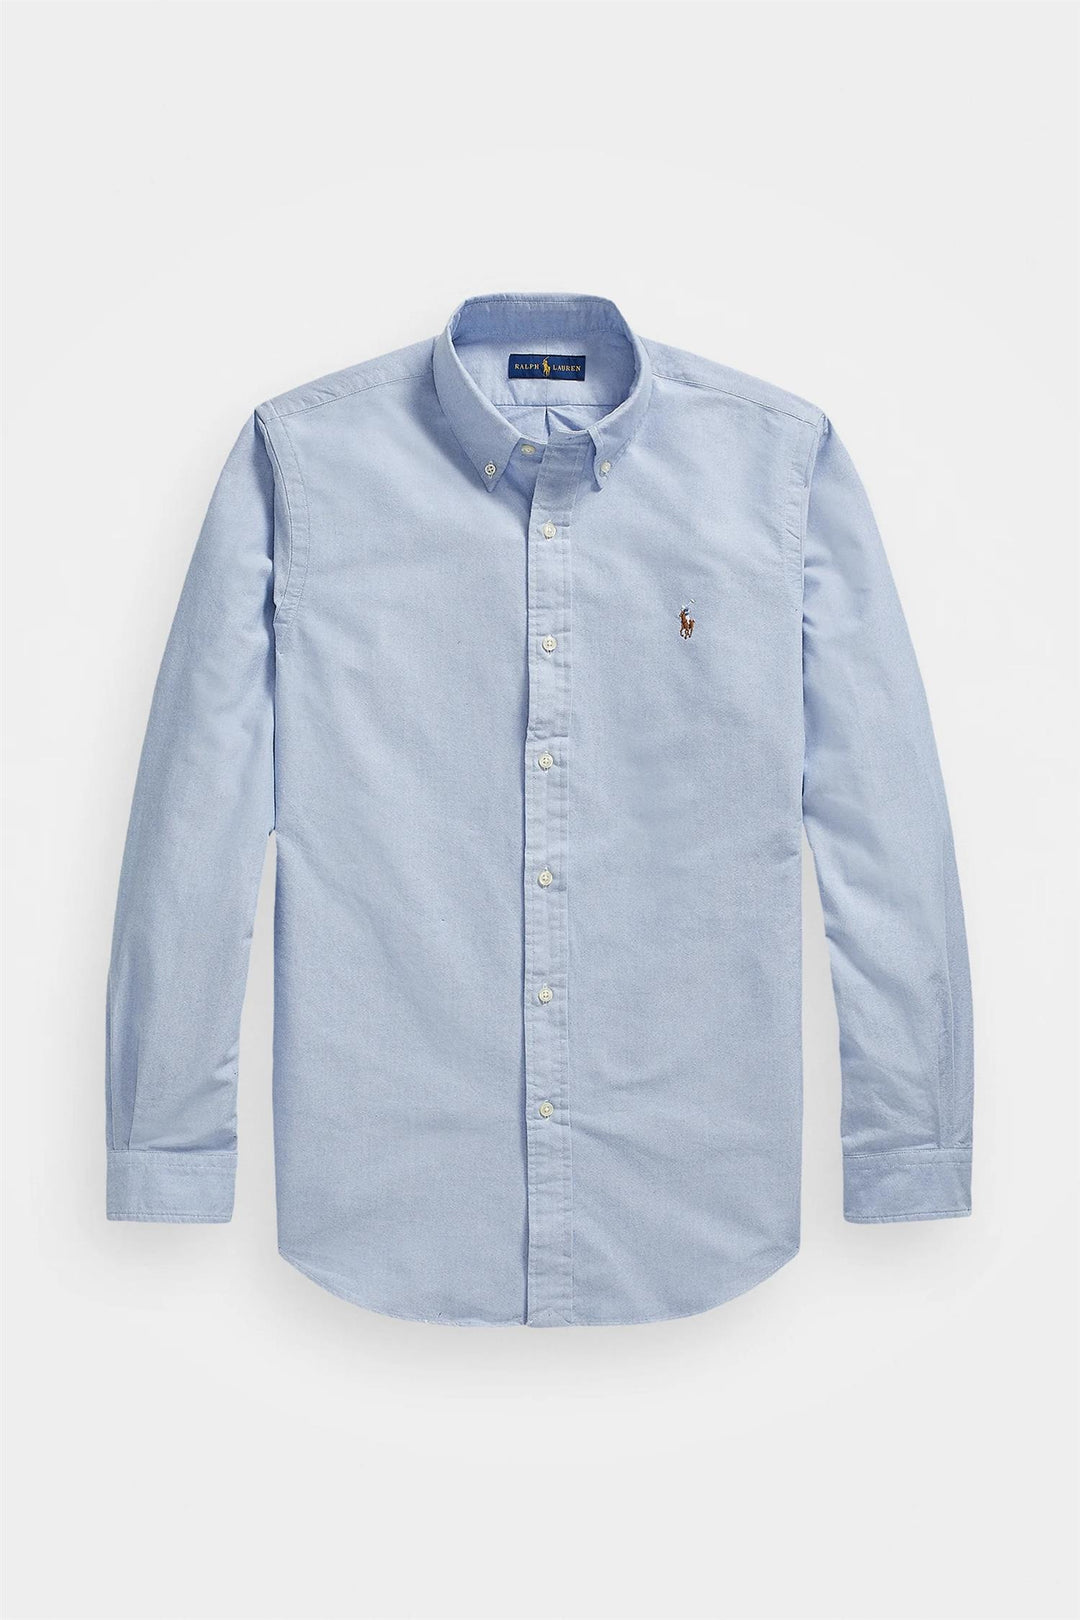 POLO RALPH LAUREN - Custom Fit Oxford Shirt - Blue - Dale